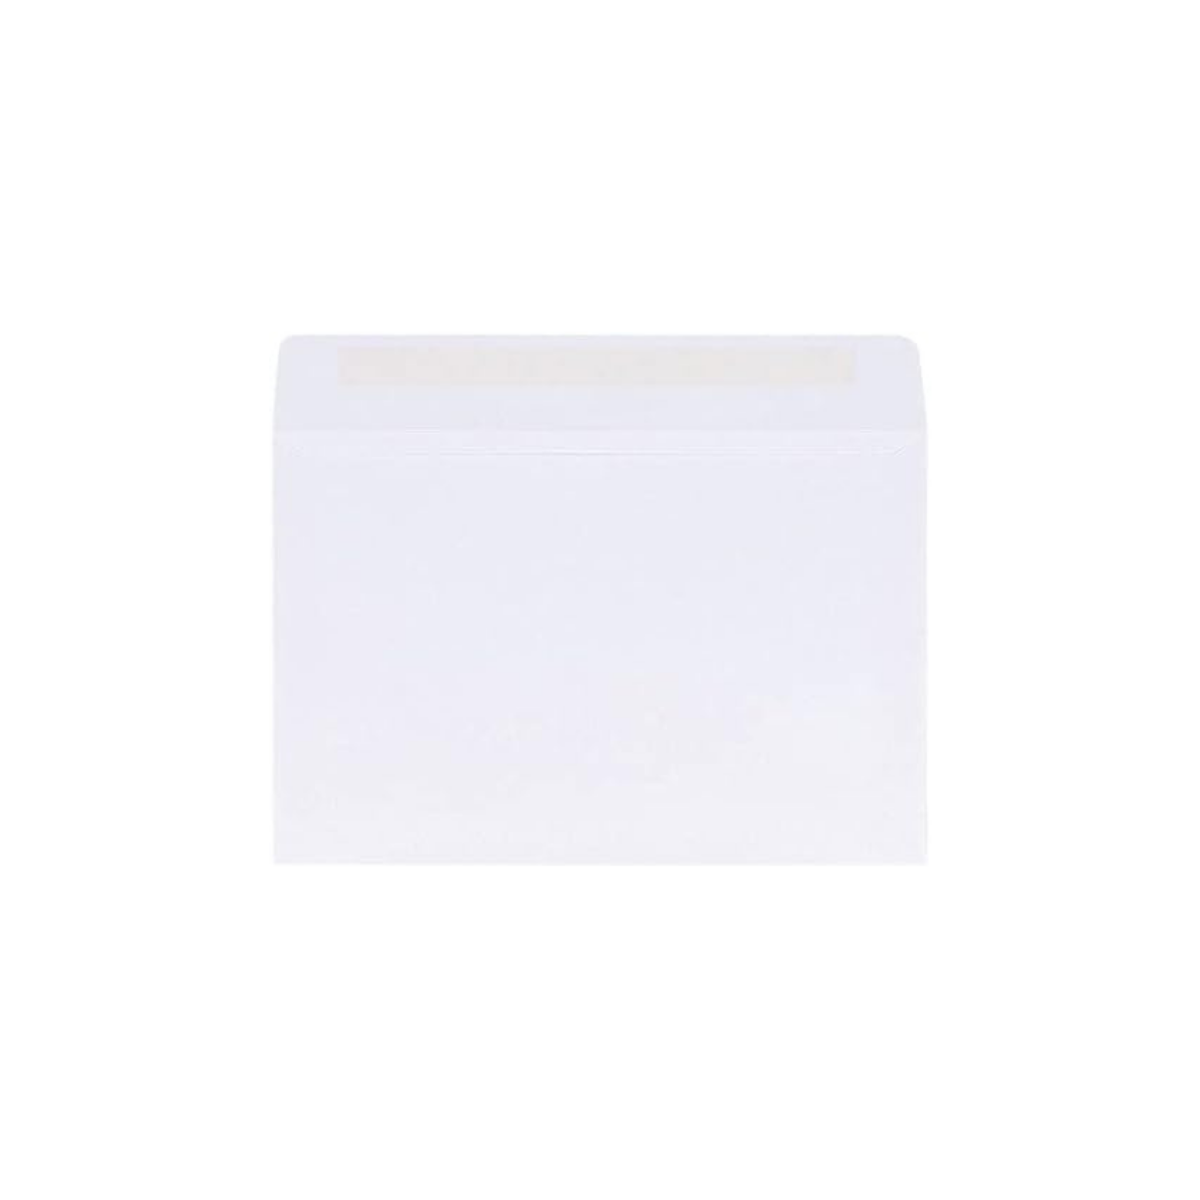 Reskid 6" x 9" Booklet Envelopes, Gummed Seal, for Mailing or Storage, 24 lb White Wove, 500 per Box